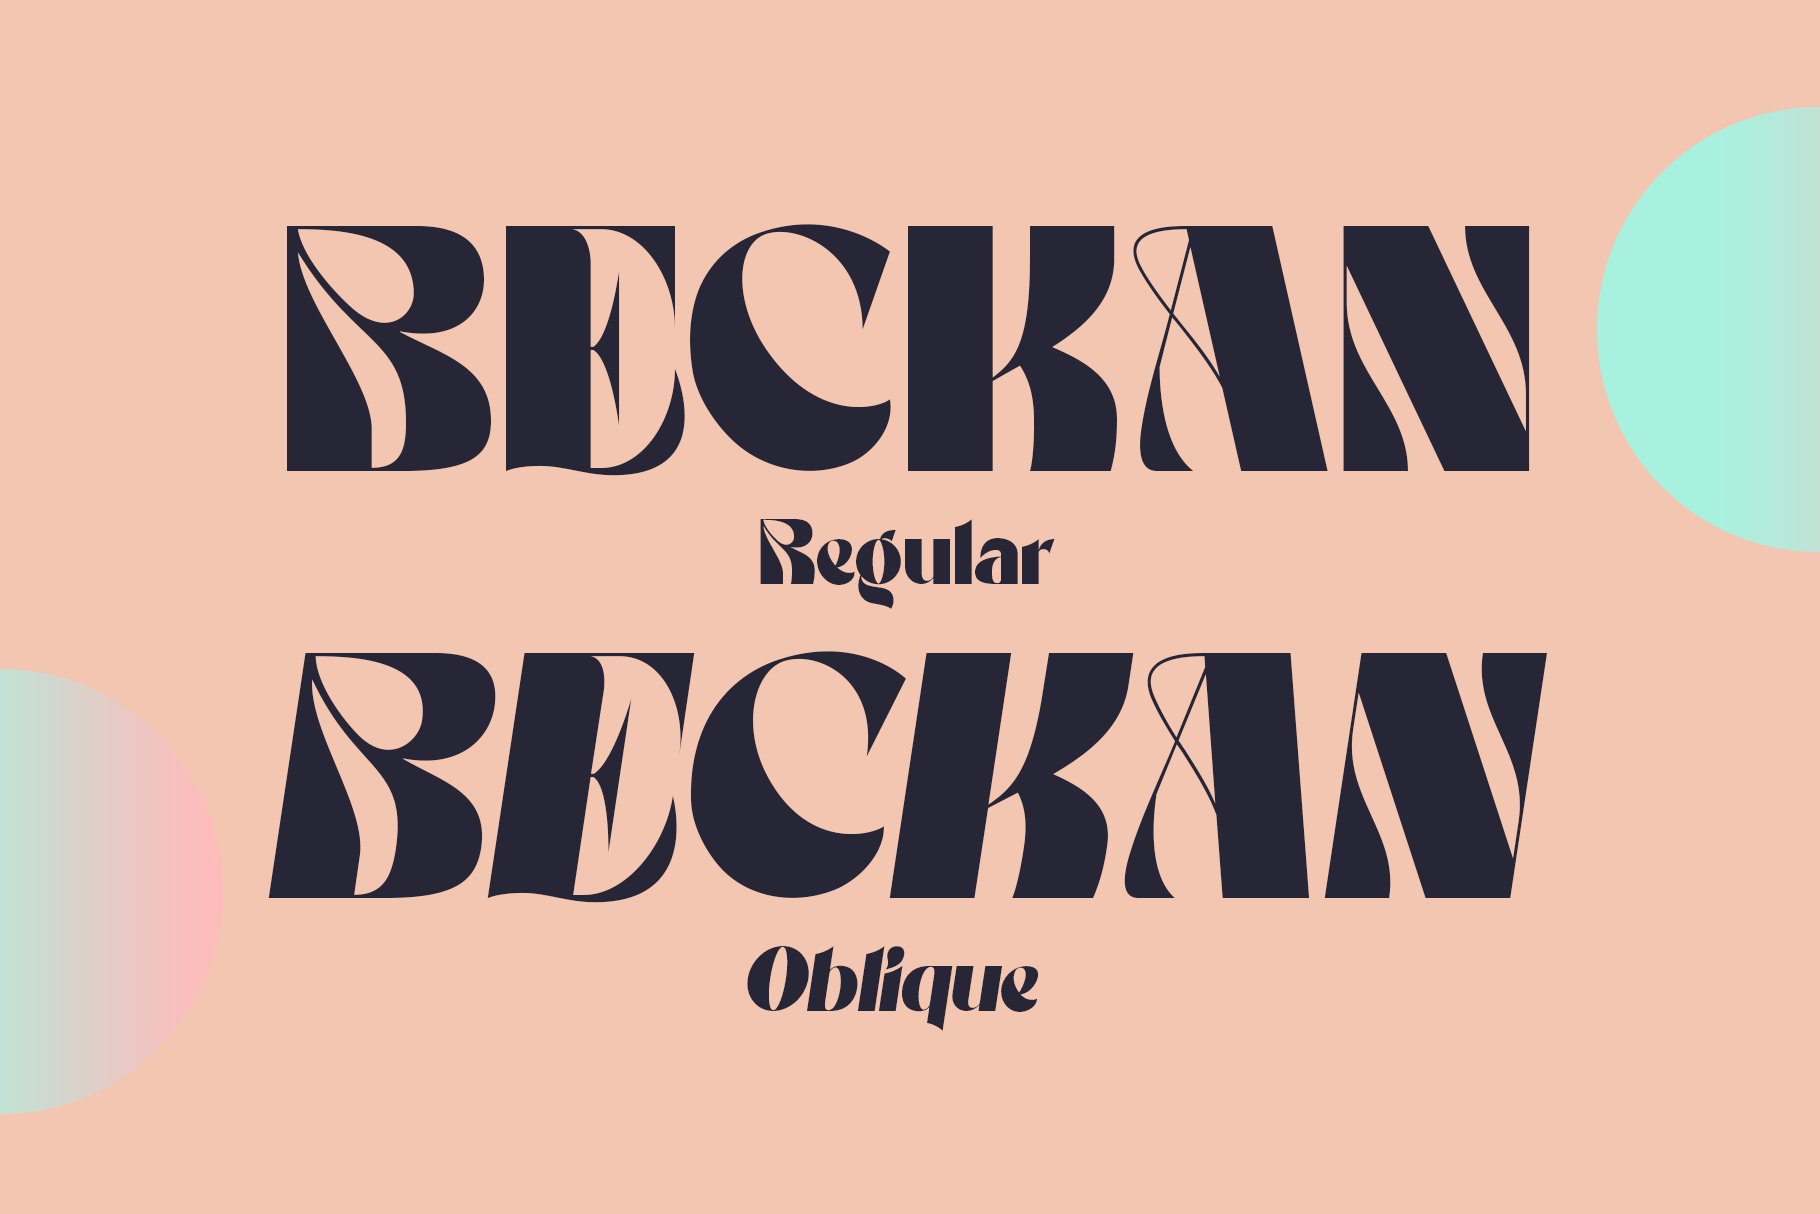 Beckan - Retro Typeface preview image.